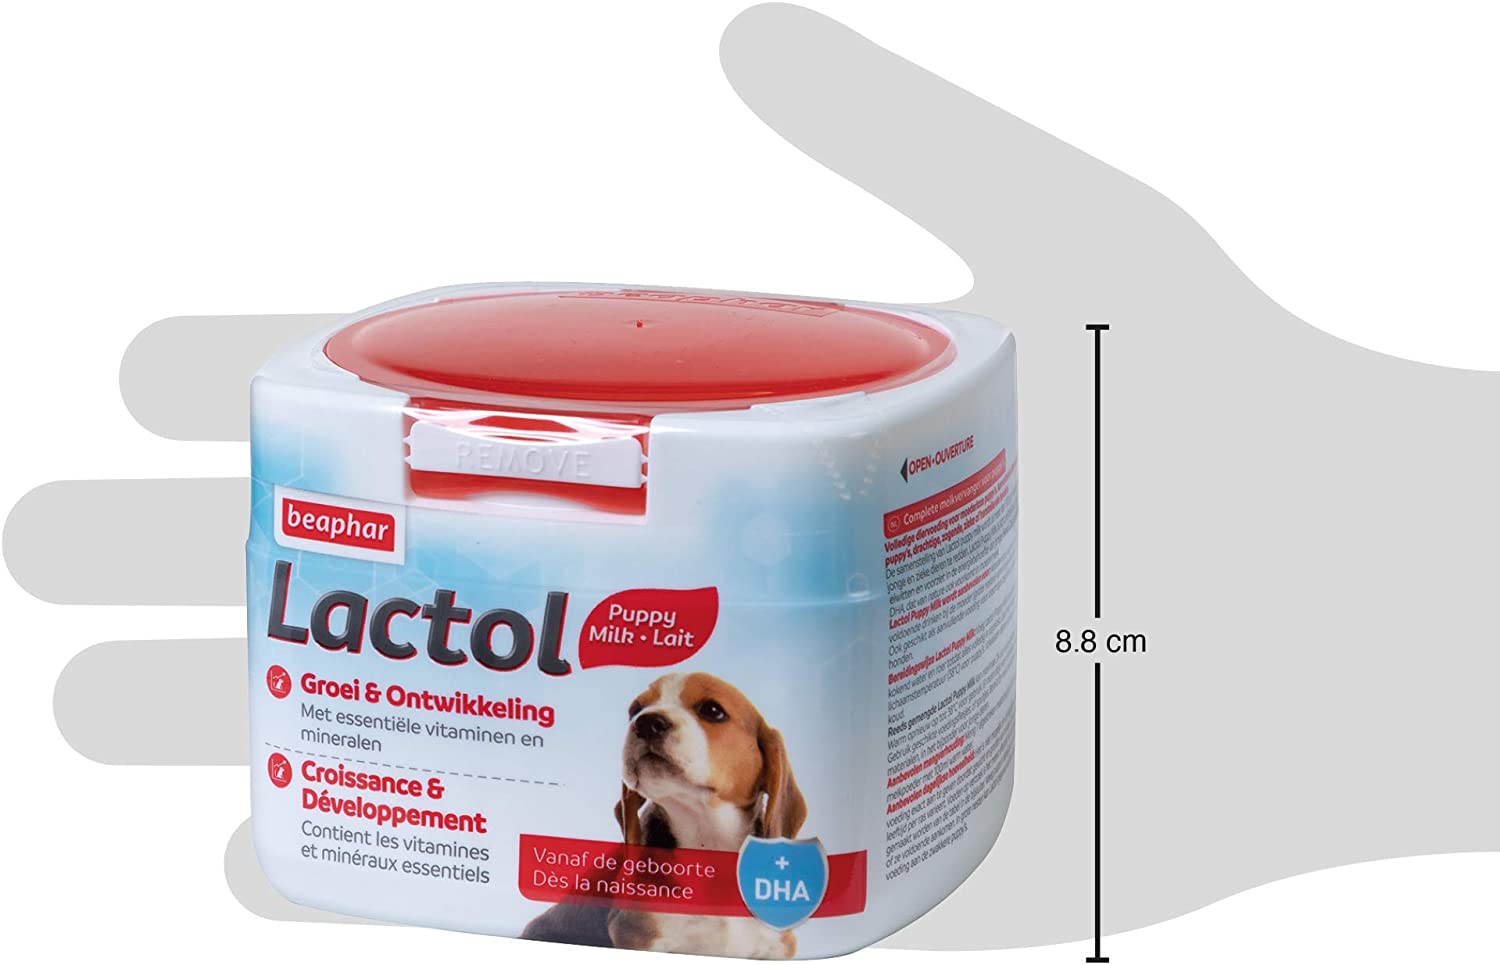  Beaphar – Lactol, Leche maternisé Completo de sustitución para Cachorros 